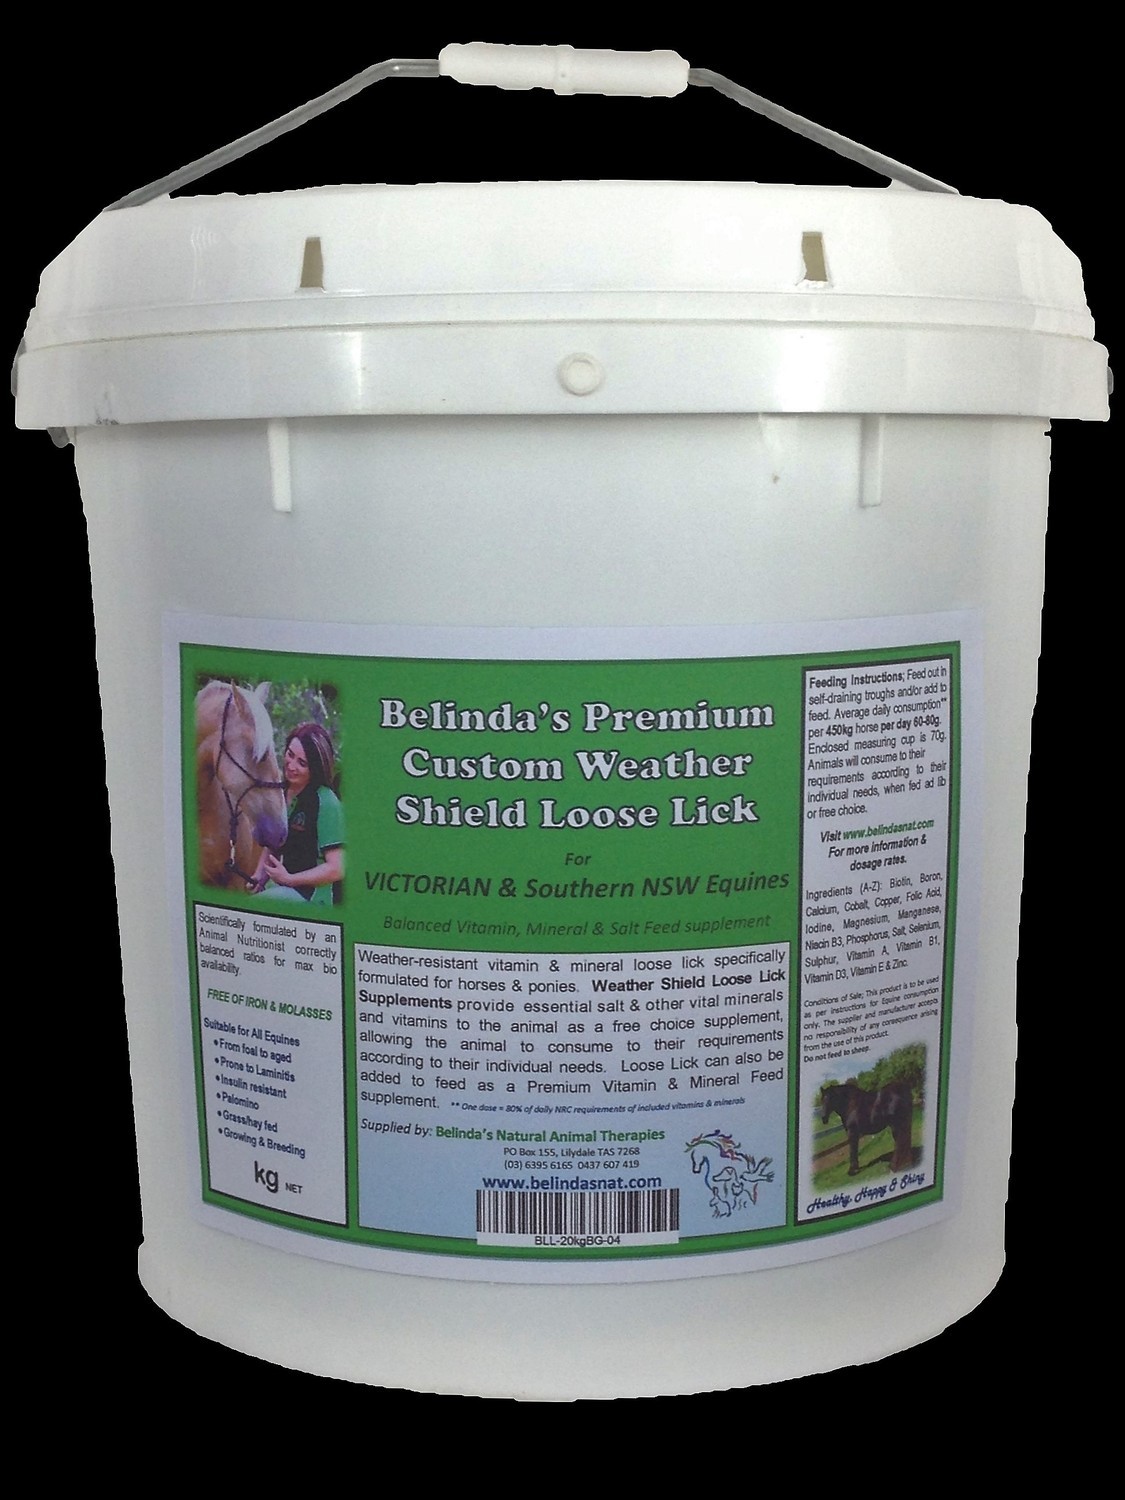 Belinda's Premium Custom Weather Shield Loose Lick Supplement - For VIC Equines, 10kg bucket